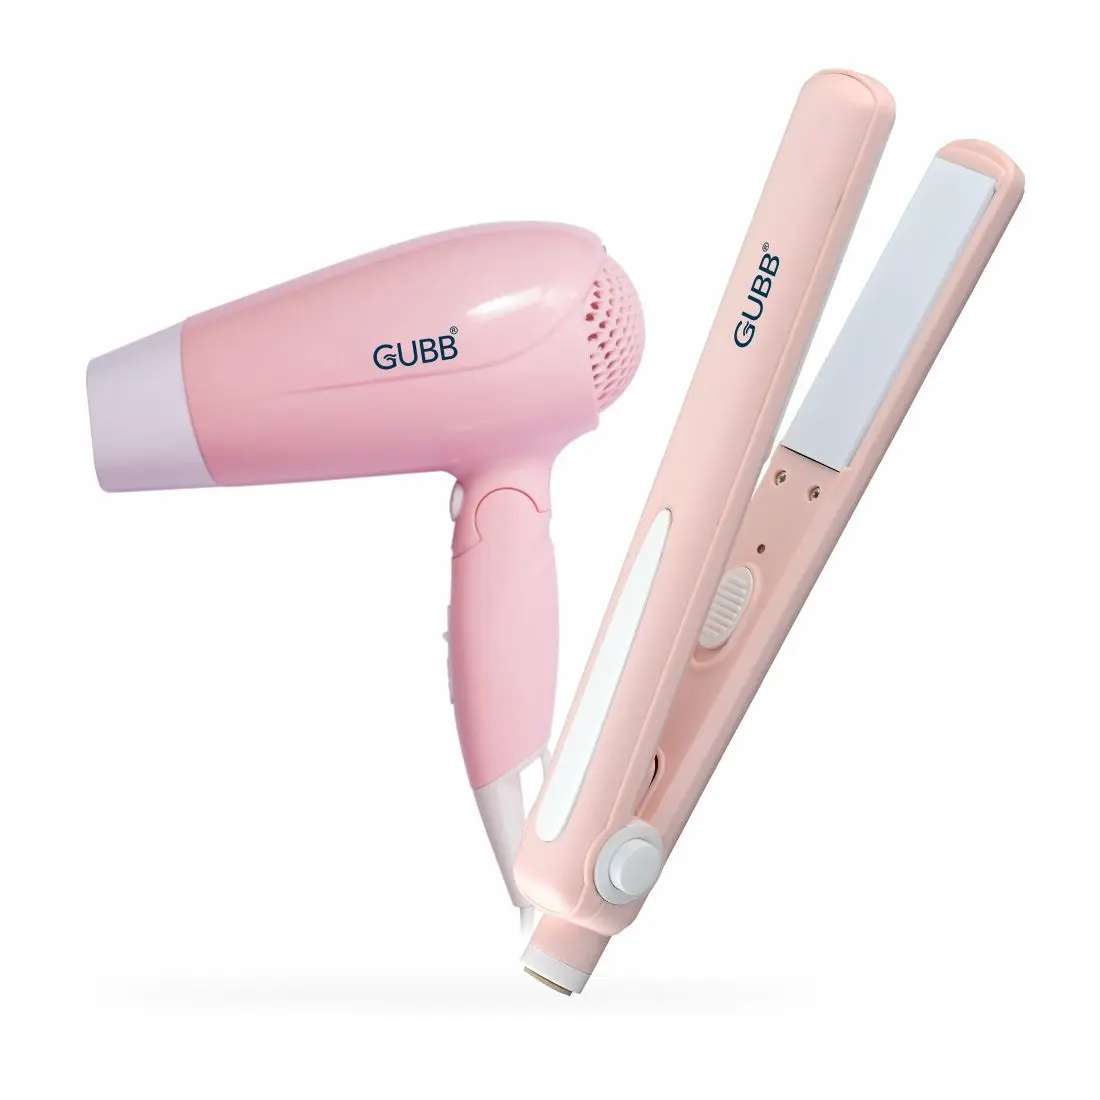 GUBB Hair Dryer & Straightener Combo for Frizz Free & Lustrous Hair - Pink